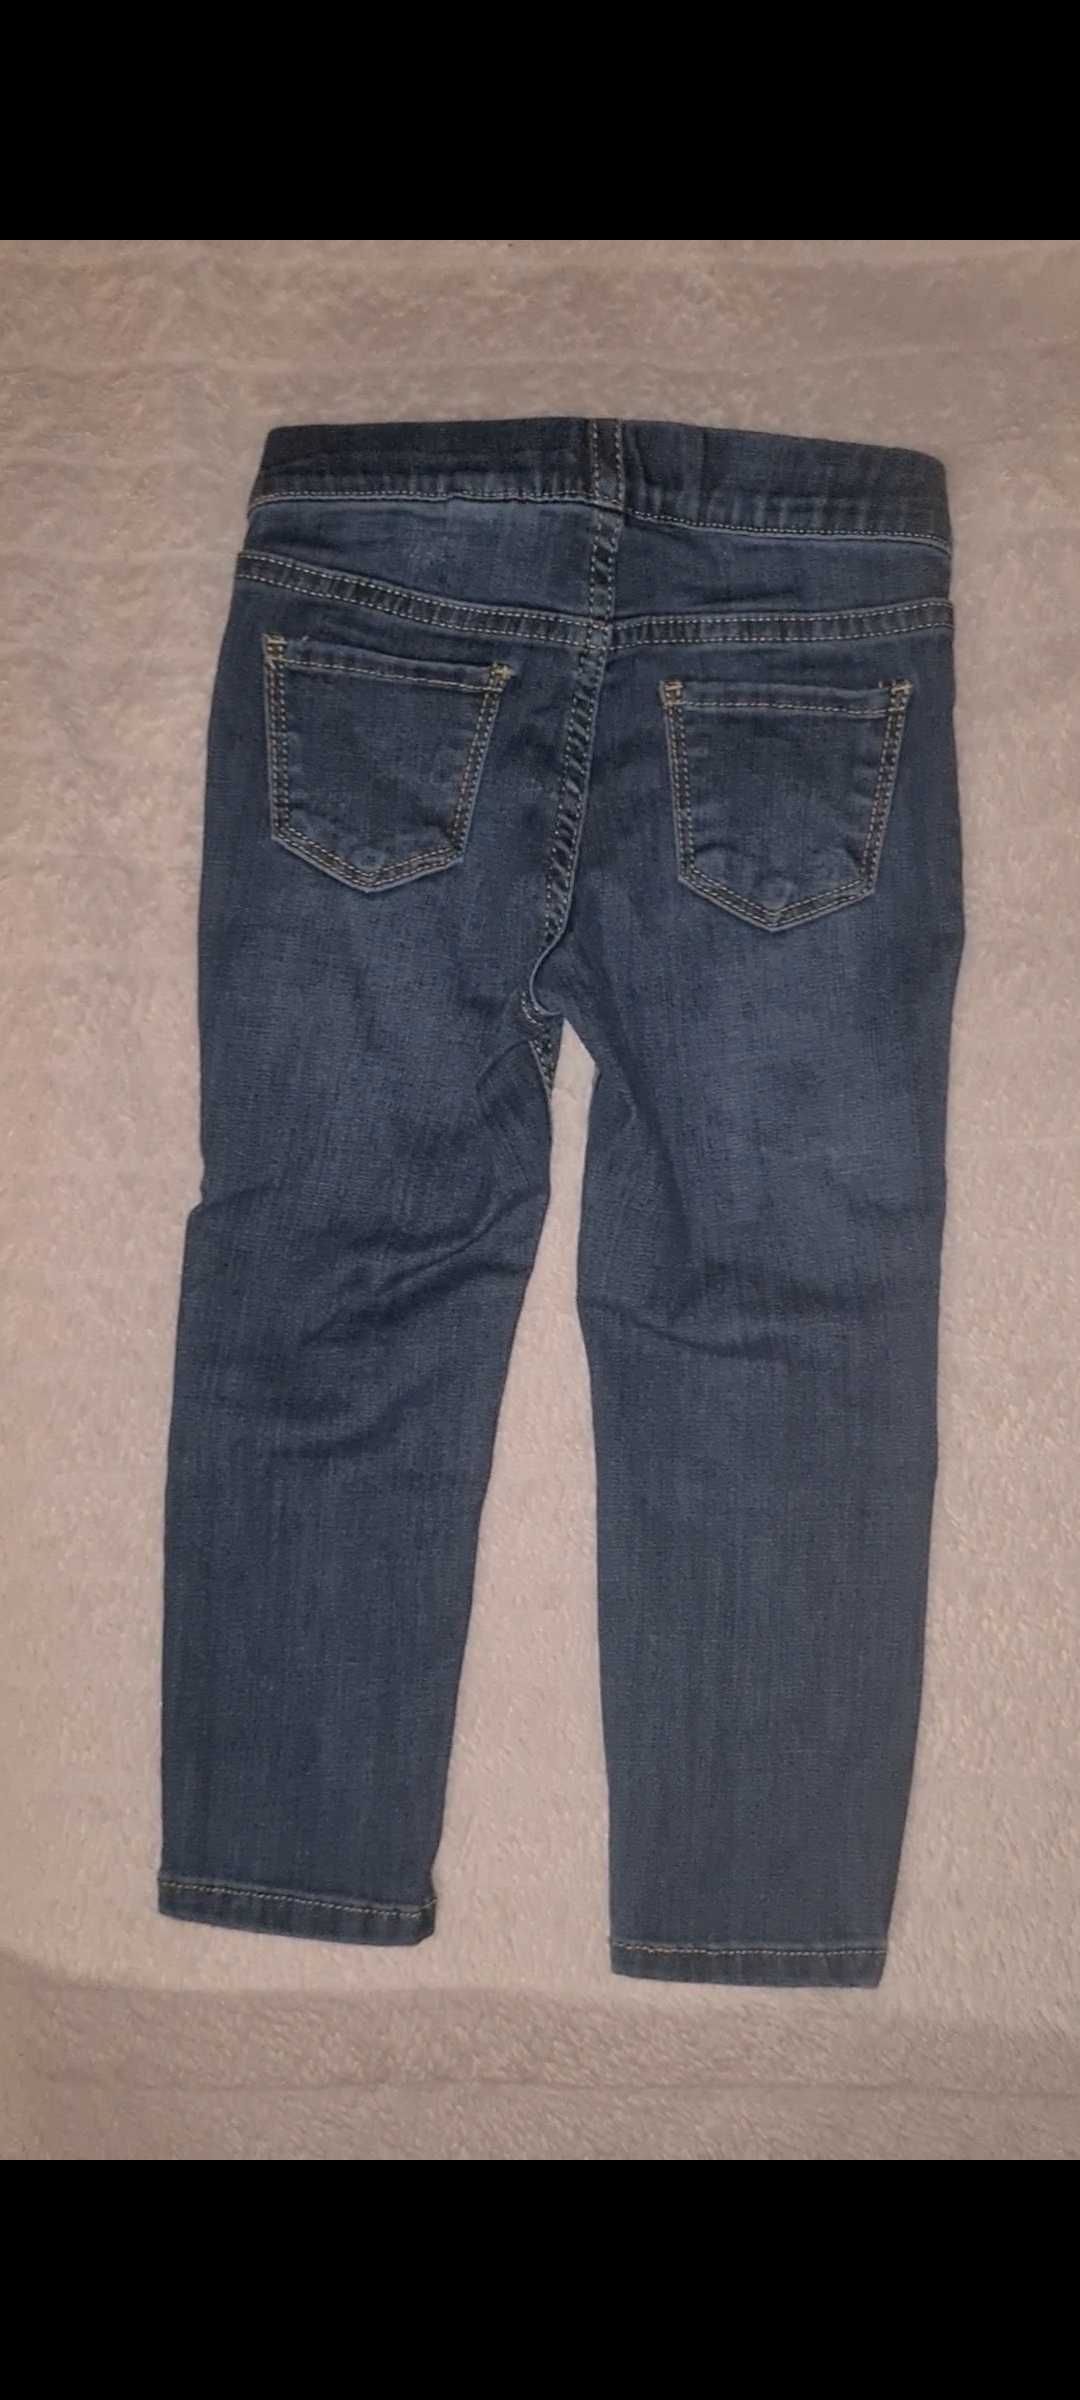 Pantaloni blugi jeans subtiri fata H&M albastri cu pisici 2/3 ani noi